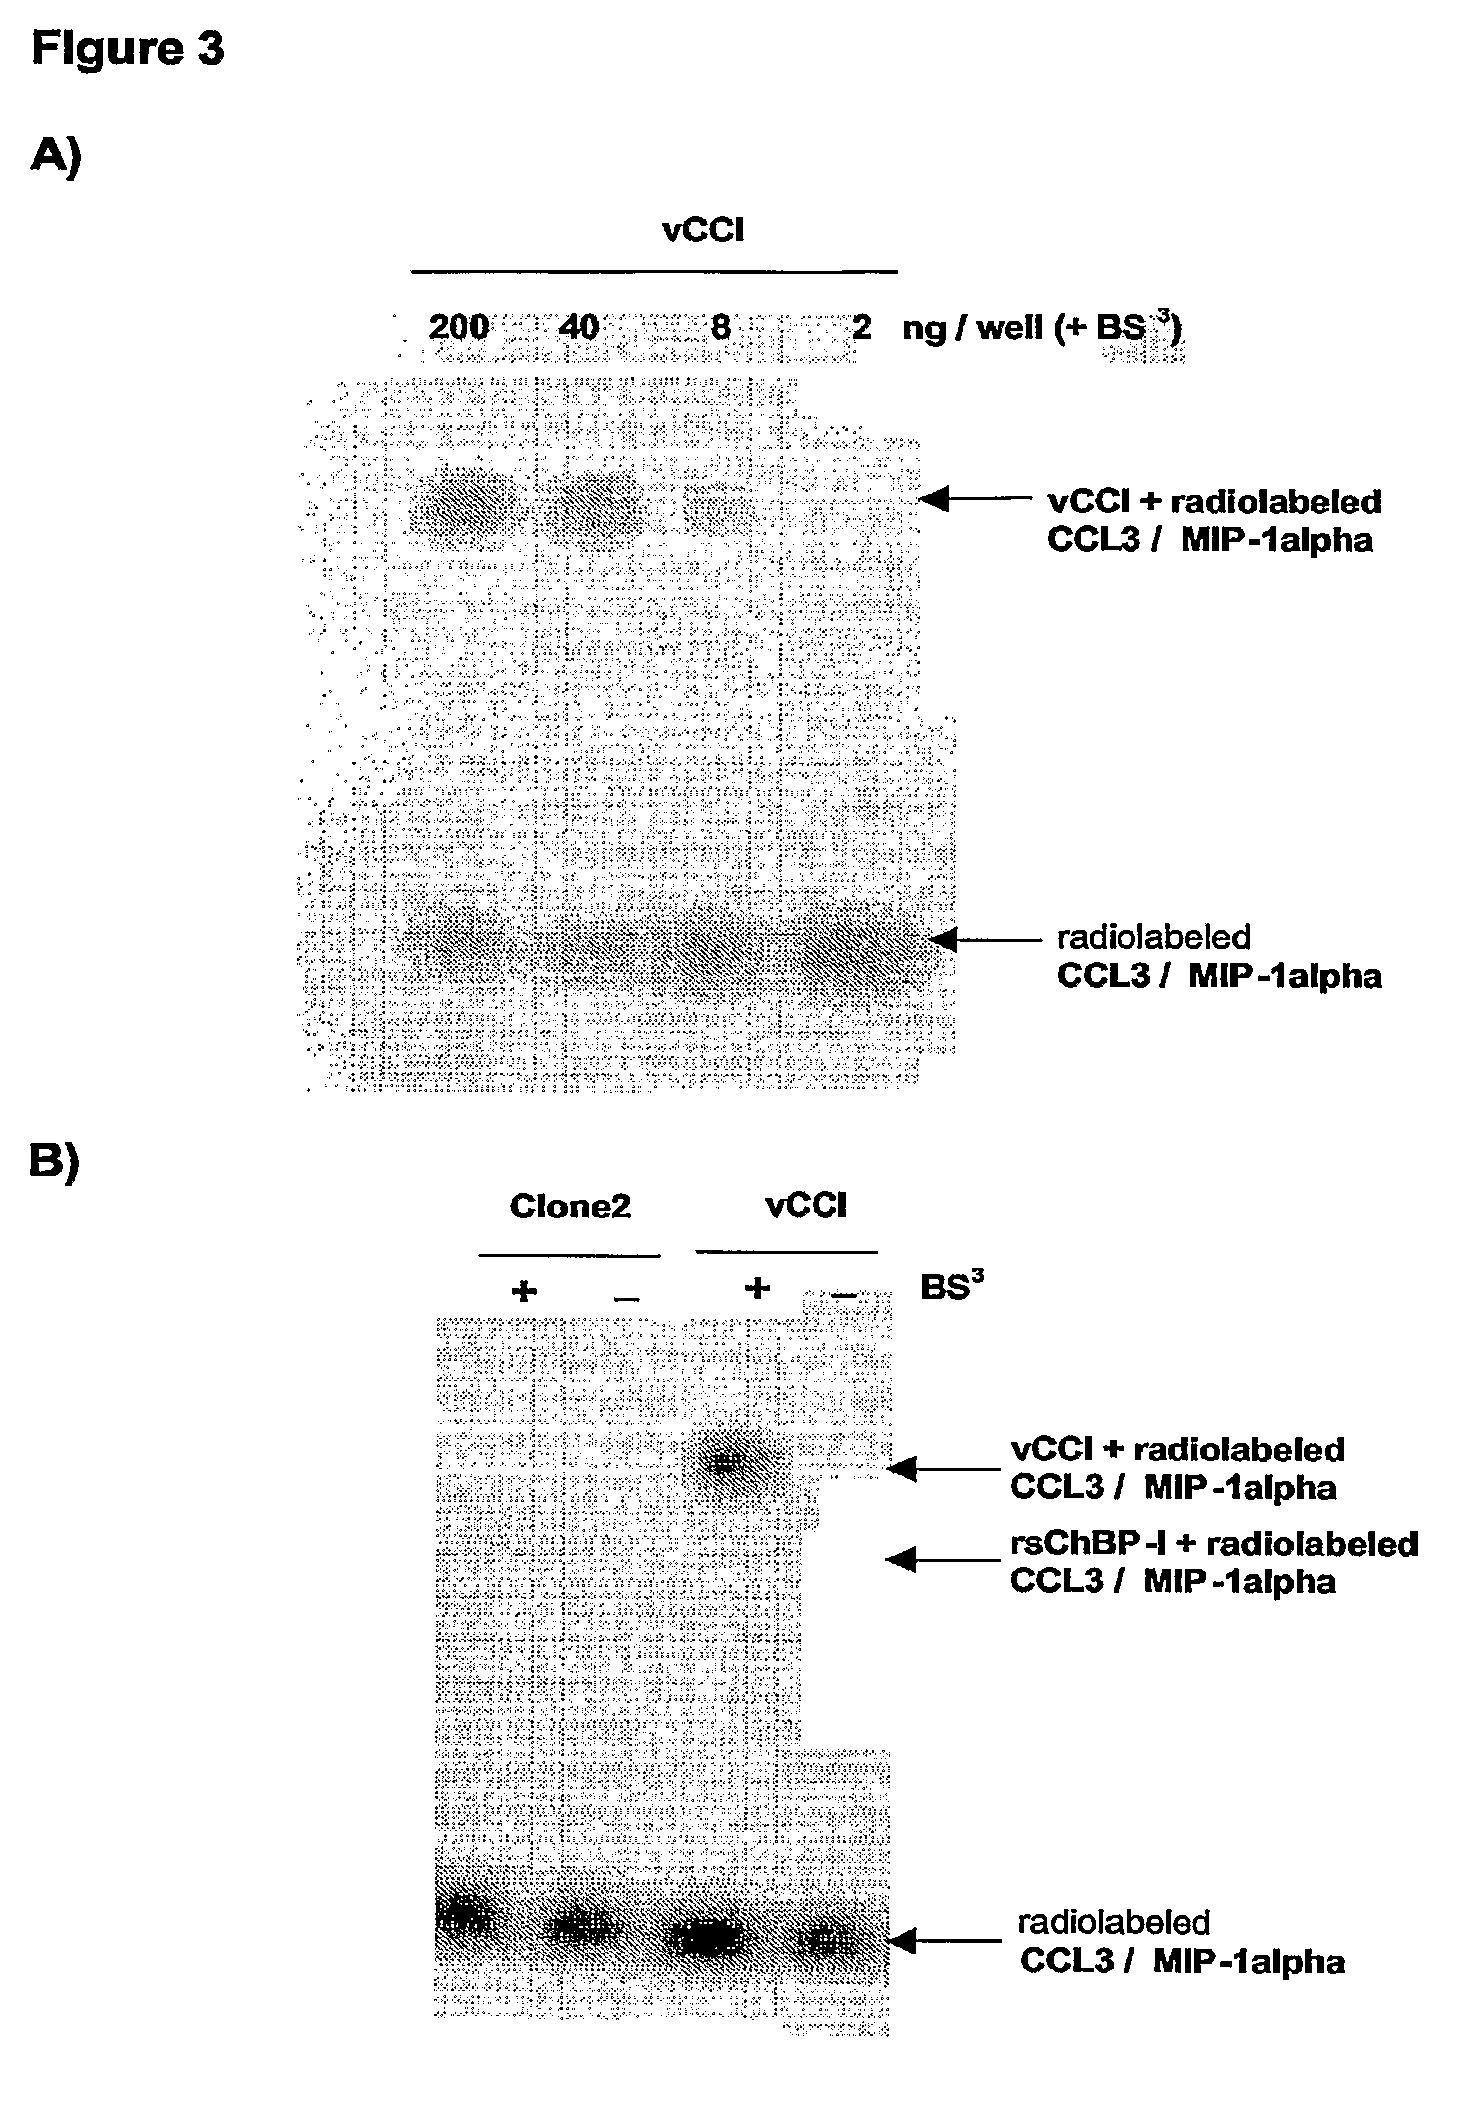 CC-chemokine binding tick proteins